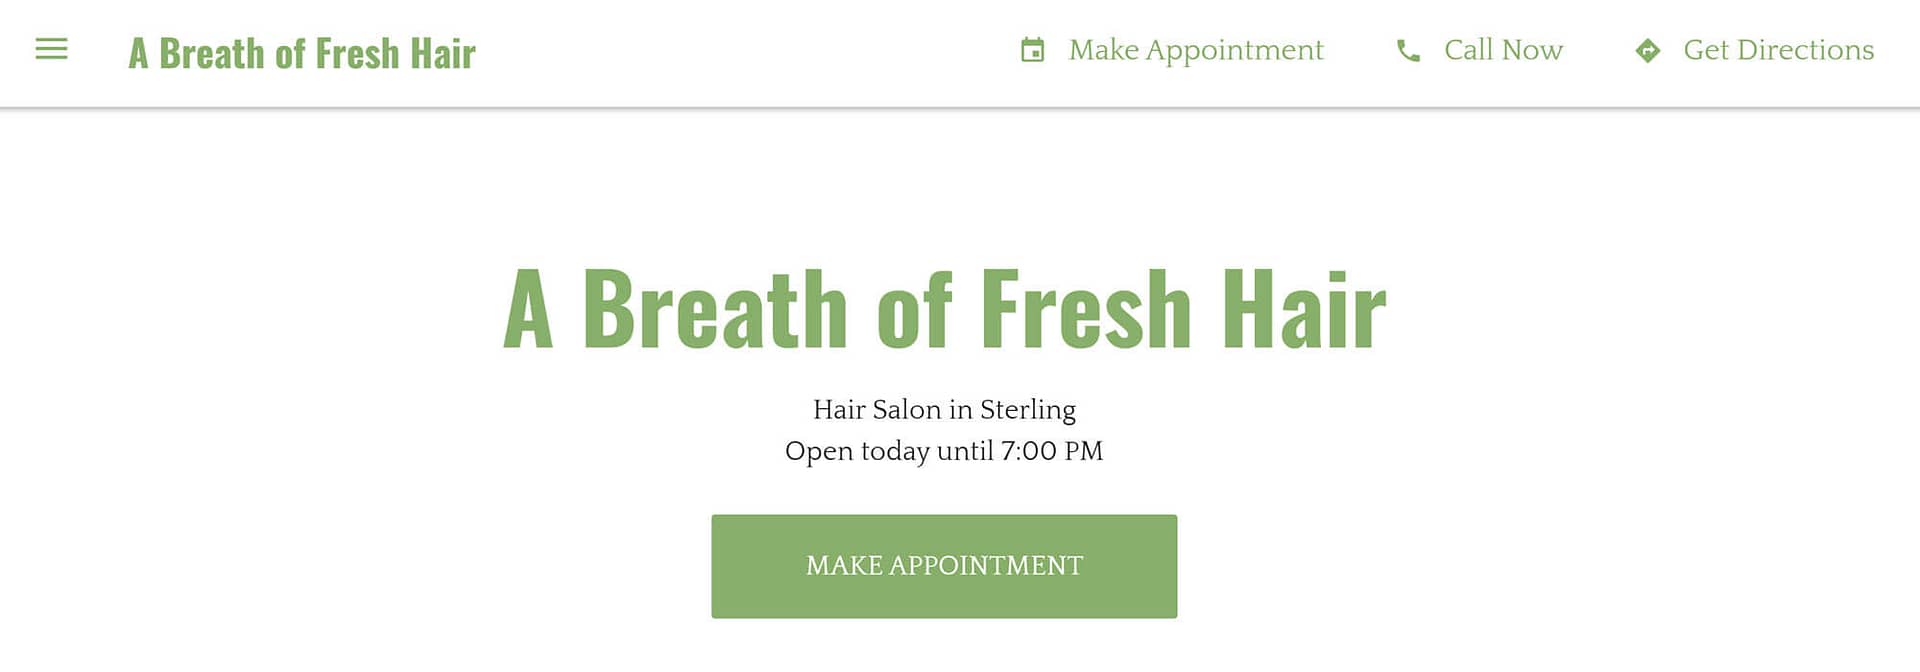 Hair business name generator: A Breath of Fresh Hair homepage